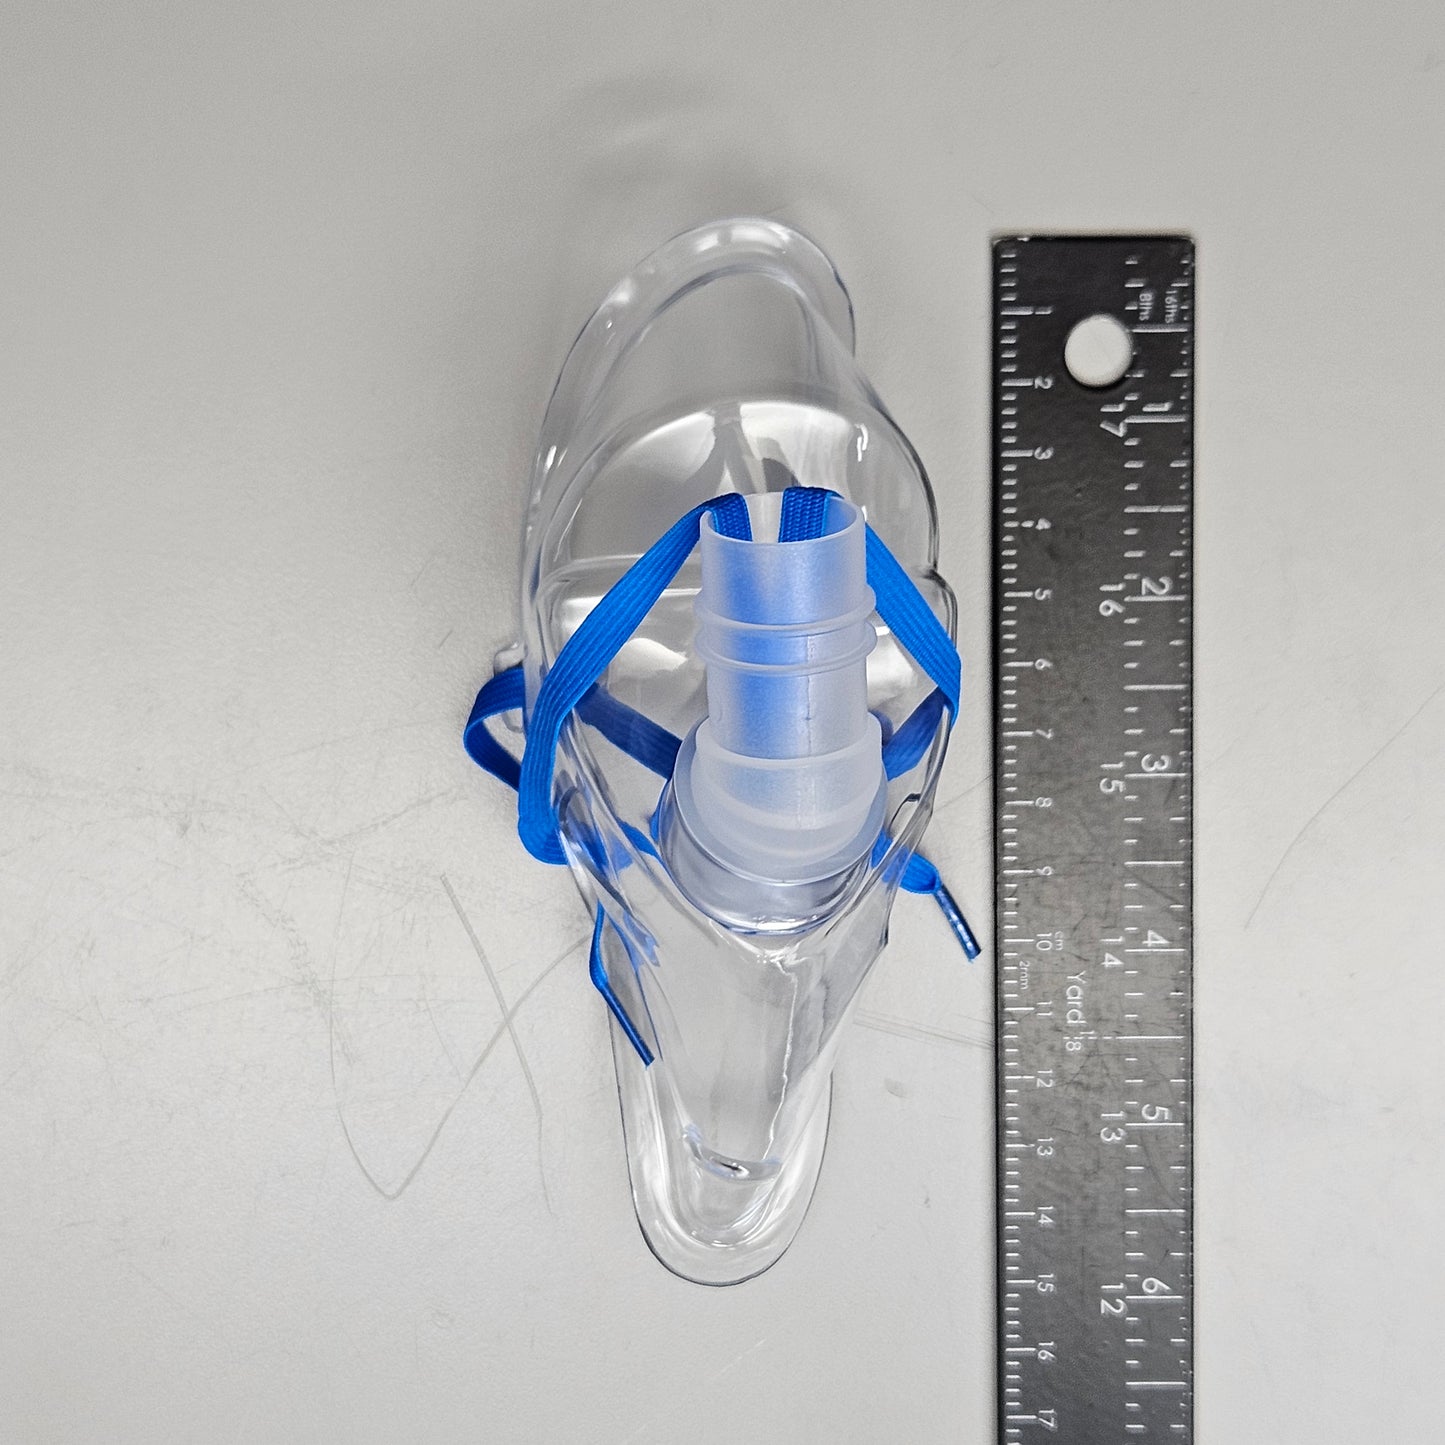 Z@ MEDLINE Disposable Nebulizer With Mask (5-Pack) Adult Aerosol Mask and Tubing